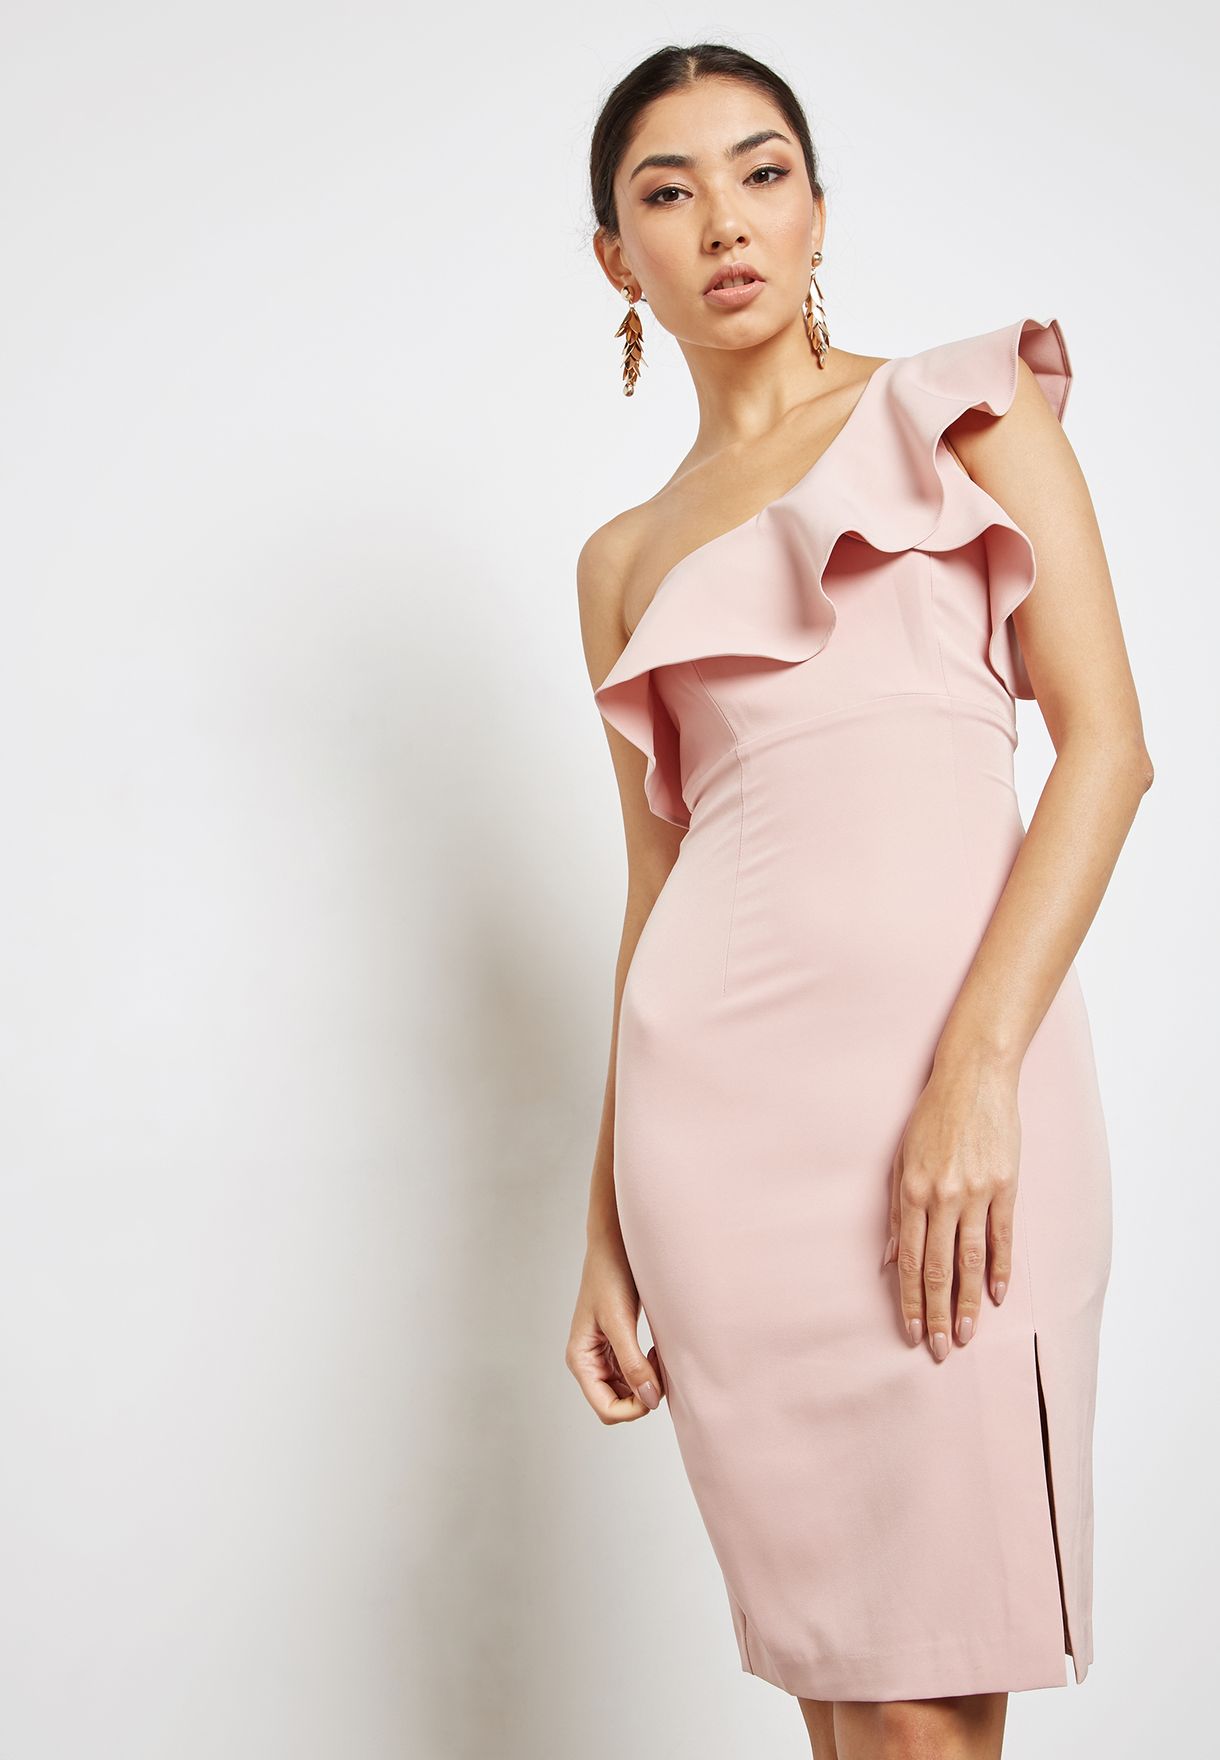 pink one shoulder ruffle dress